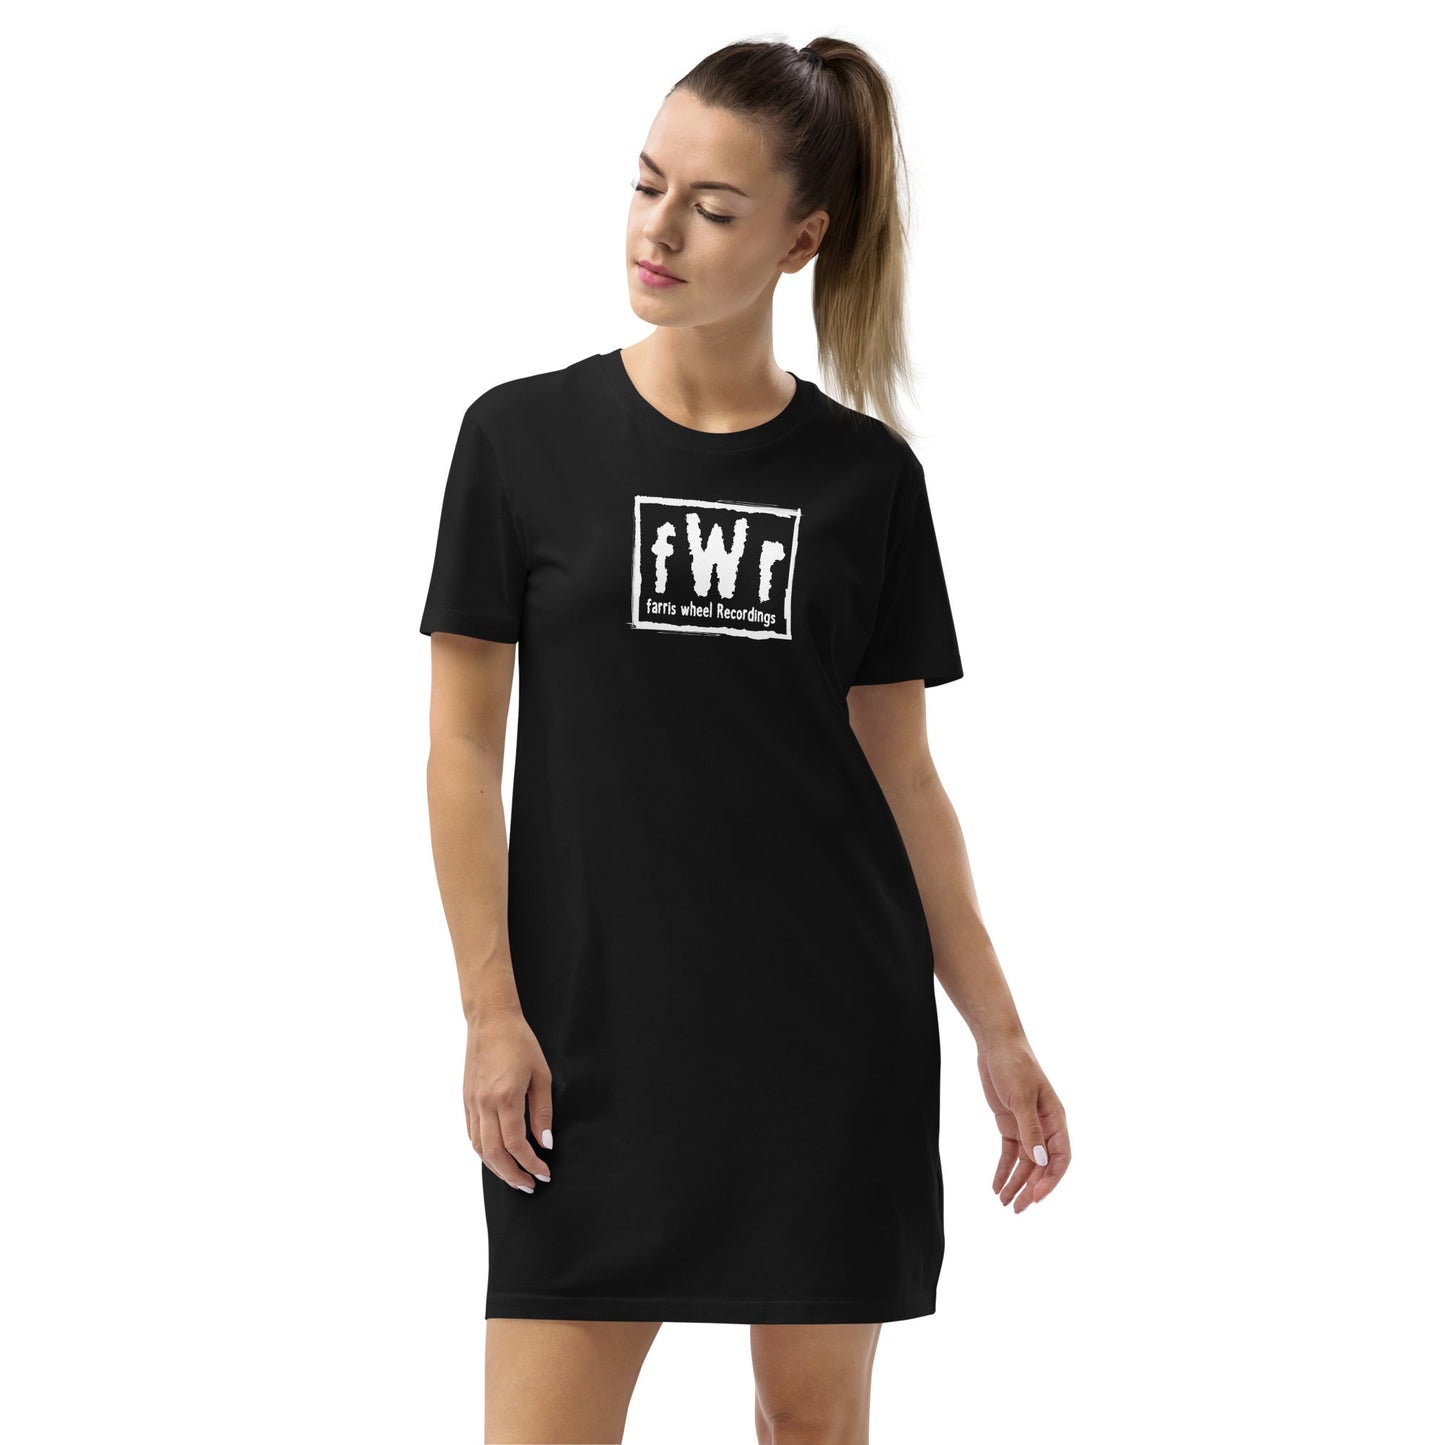 Farris Wheel fWr Organic Cotton T-Shirt Dress - BeExtra! Apparel & More